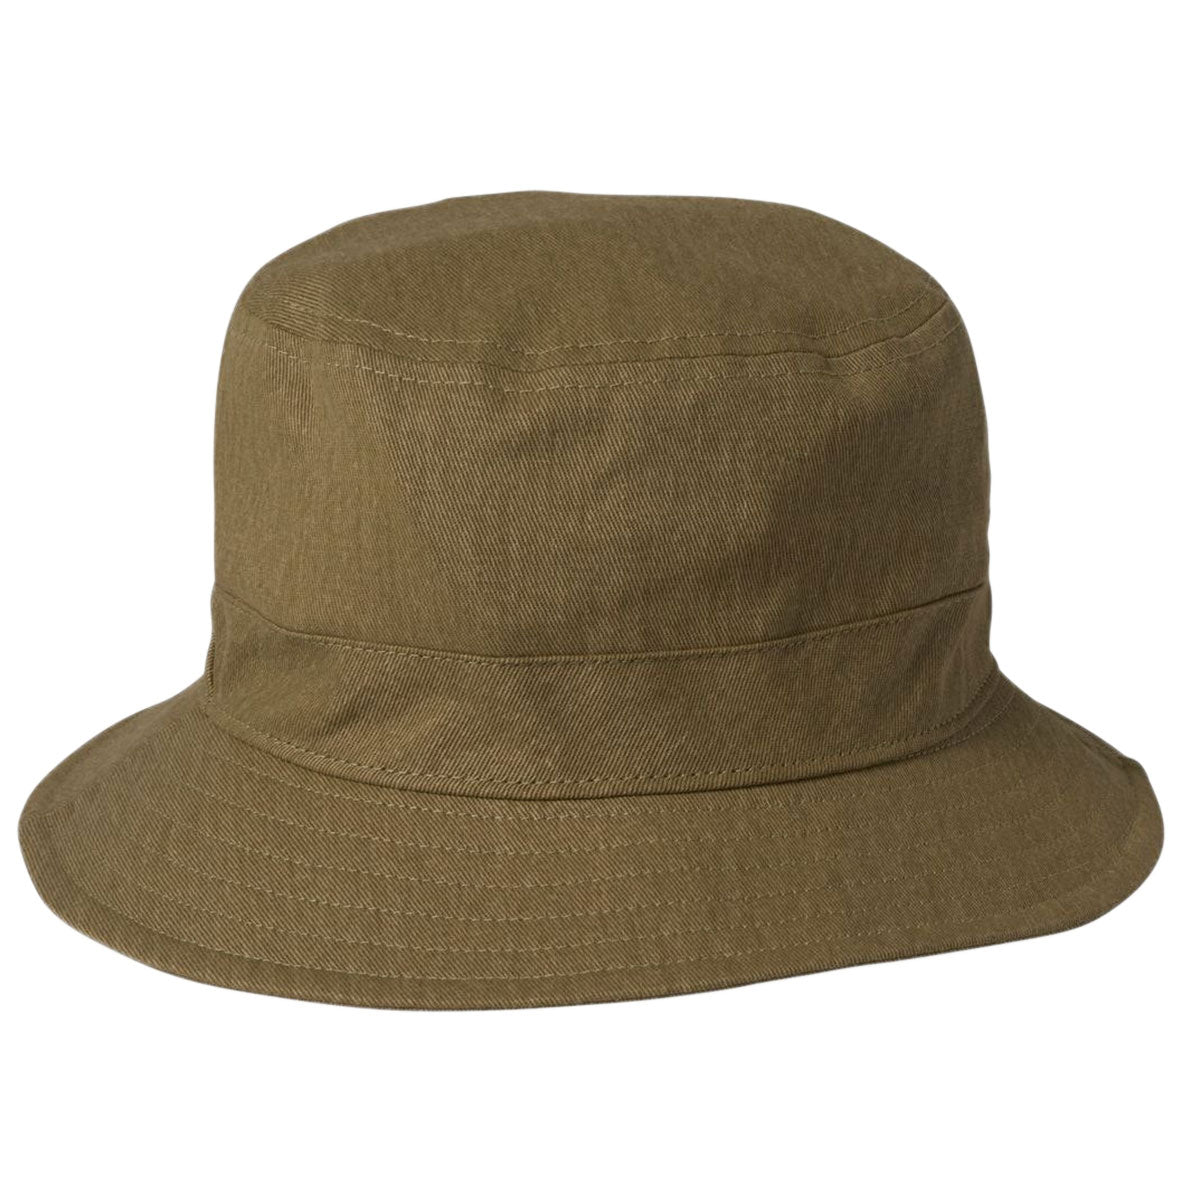 Brixton Woodburn Packable Bucket Hat - Sand Sol Wash image 2